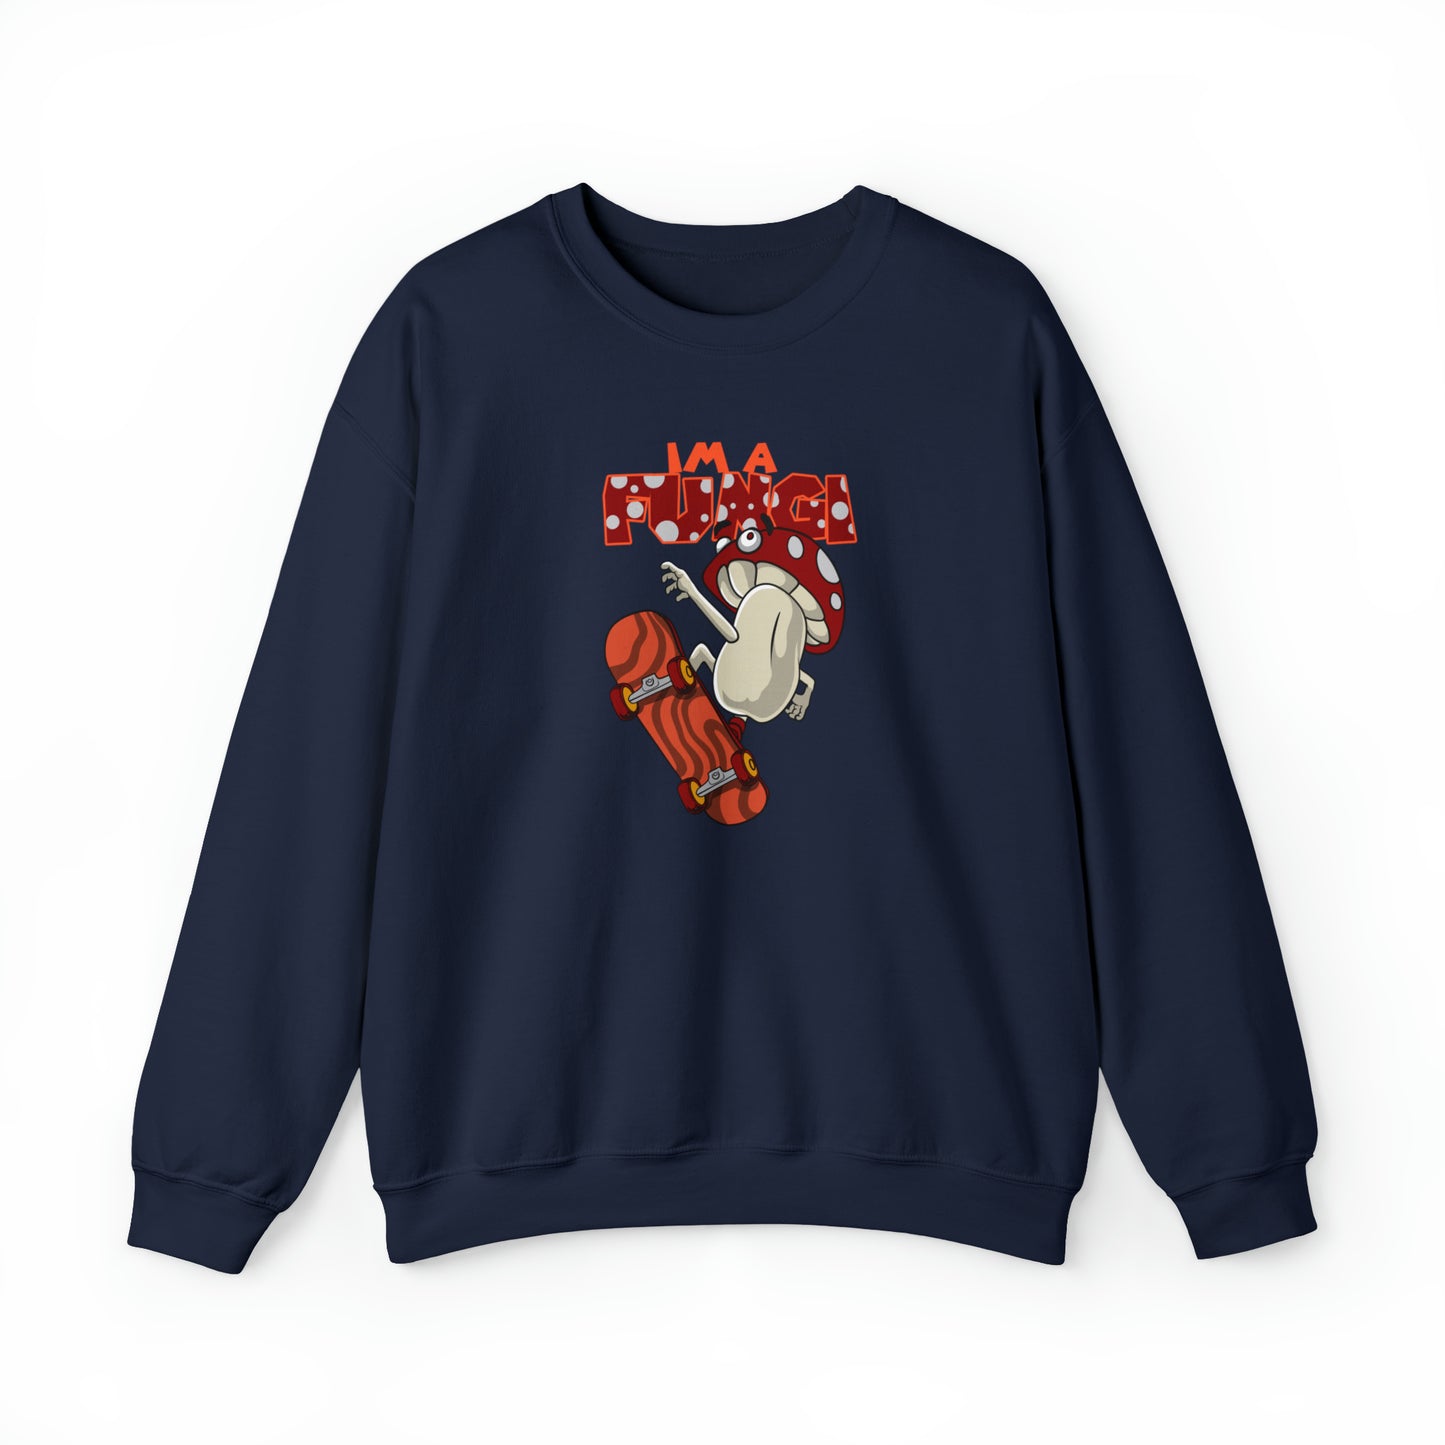 Custom Parody Crewneck Sweatshirt, I'm a FUNGI Design